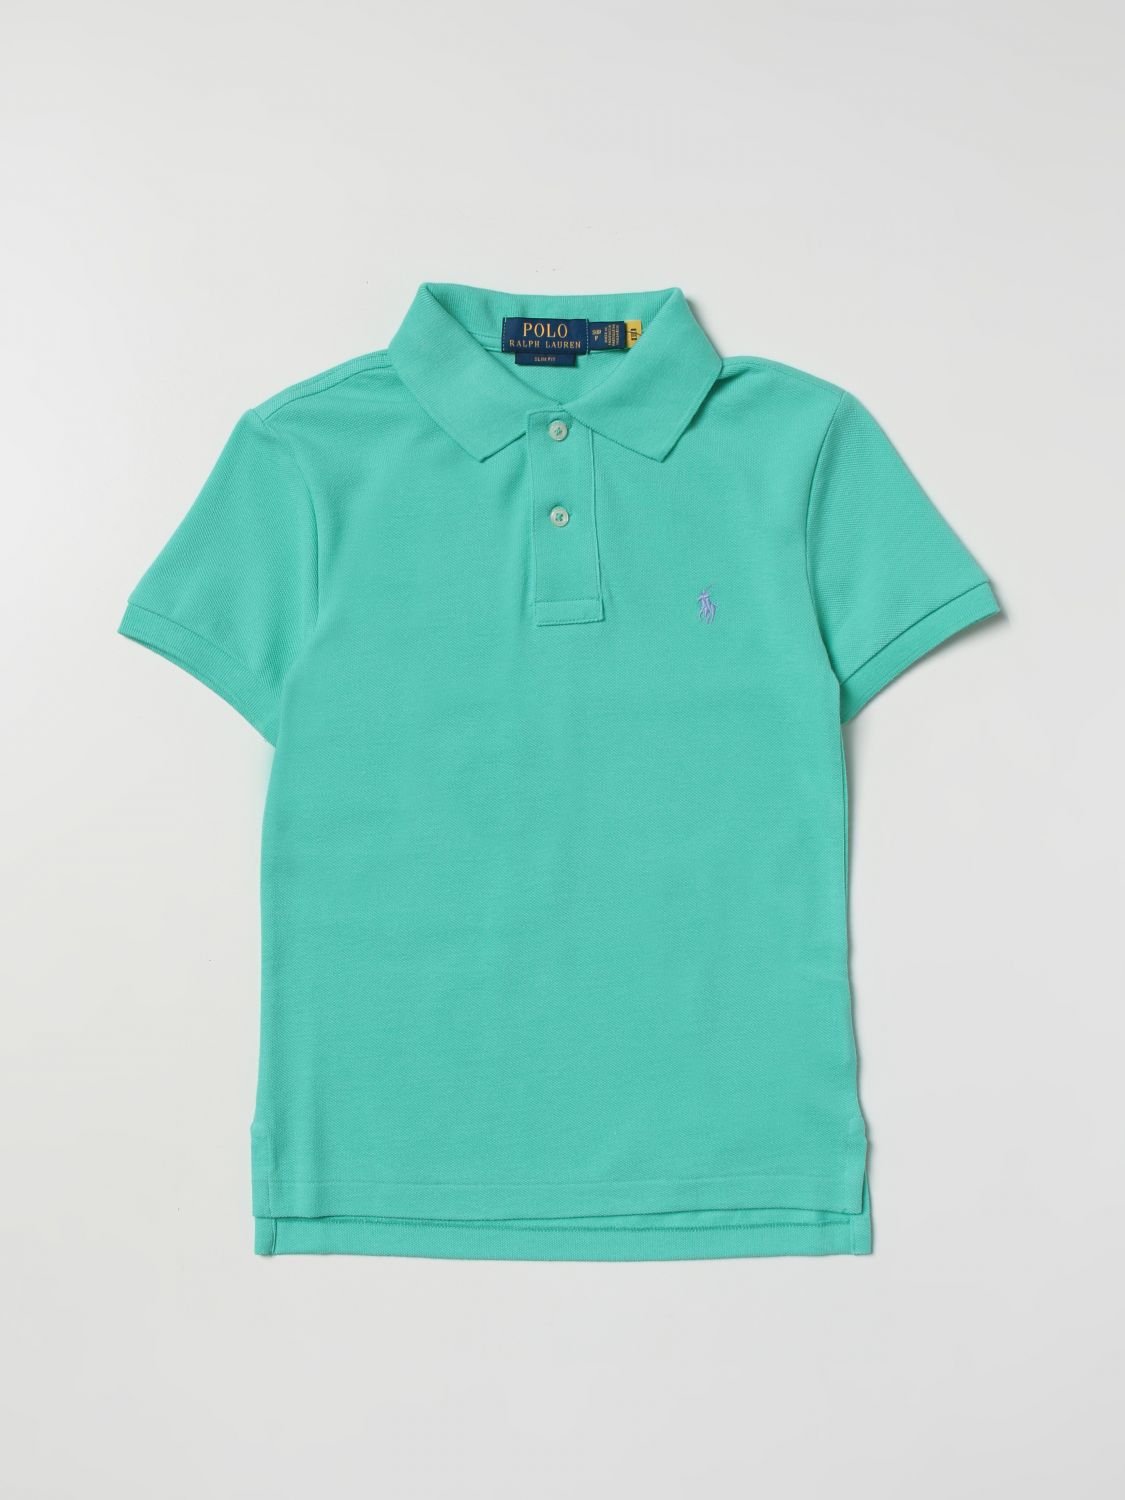 Polo Ralph Lauren Polo Shirt  Kids Color Green